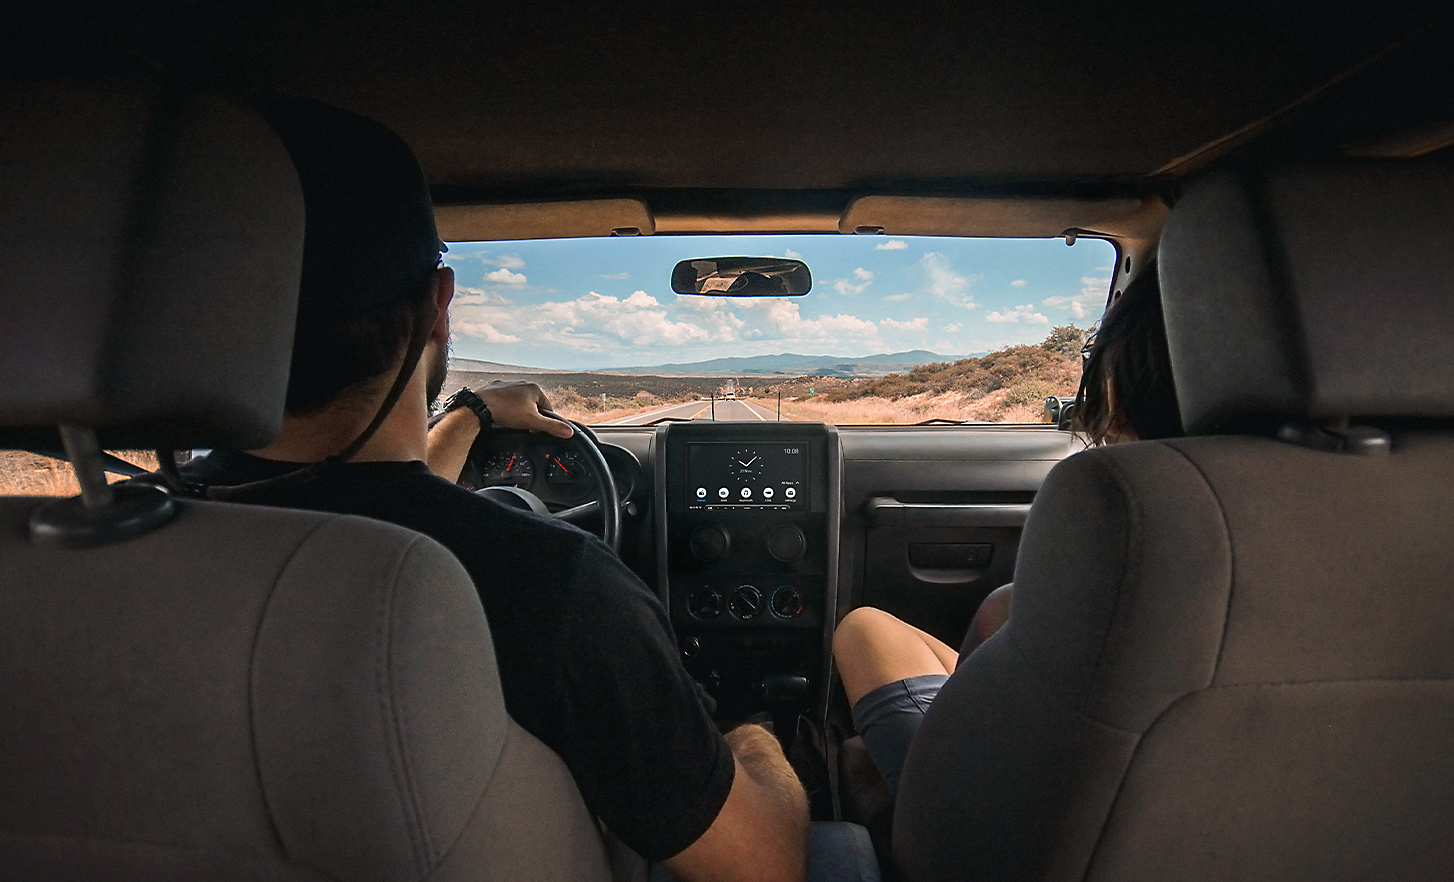 Slika na kojoj dve osobe voze kroz predeo nalik pustinji dok se na instrument tabli vidi XAV-AX6050